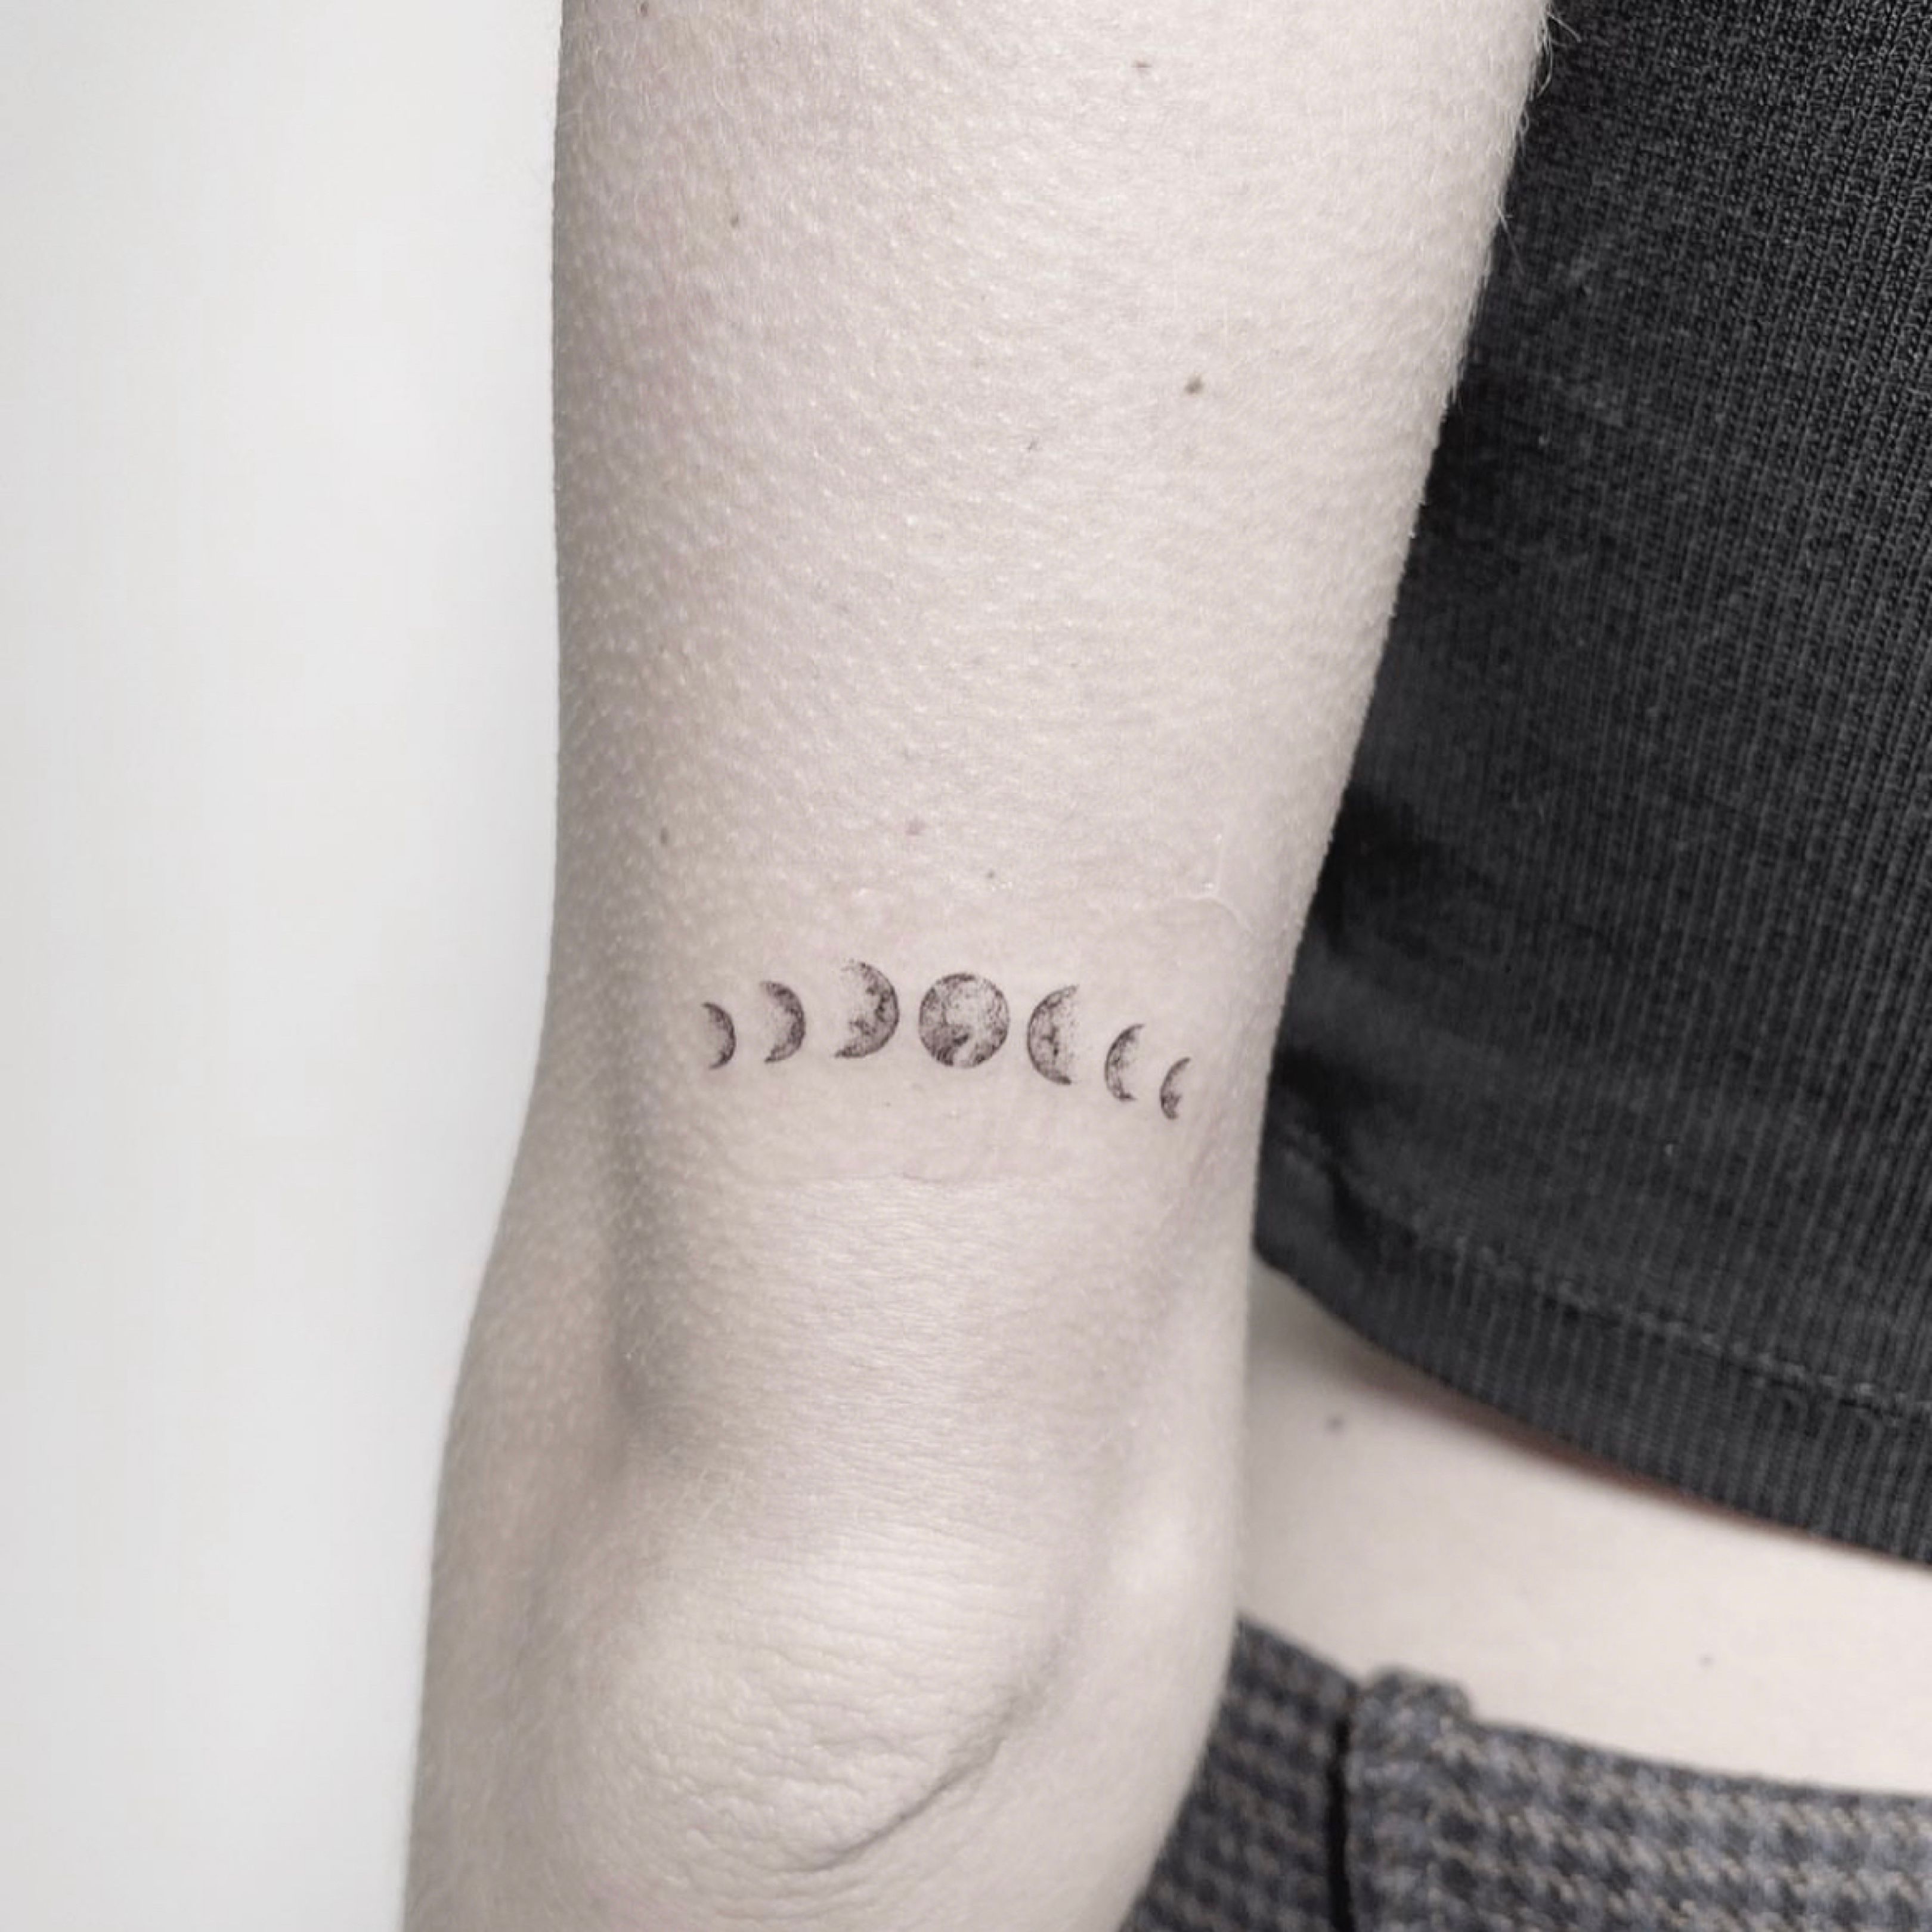 Tattoo uploaded by Gwendolyn de Zoete  Moon phases tattoo dotwork   Tattoodo